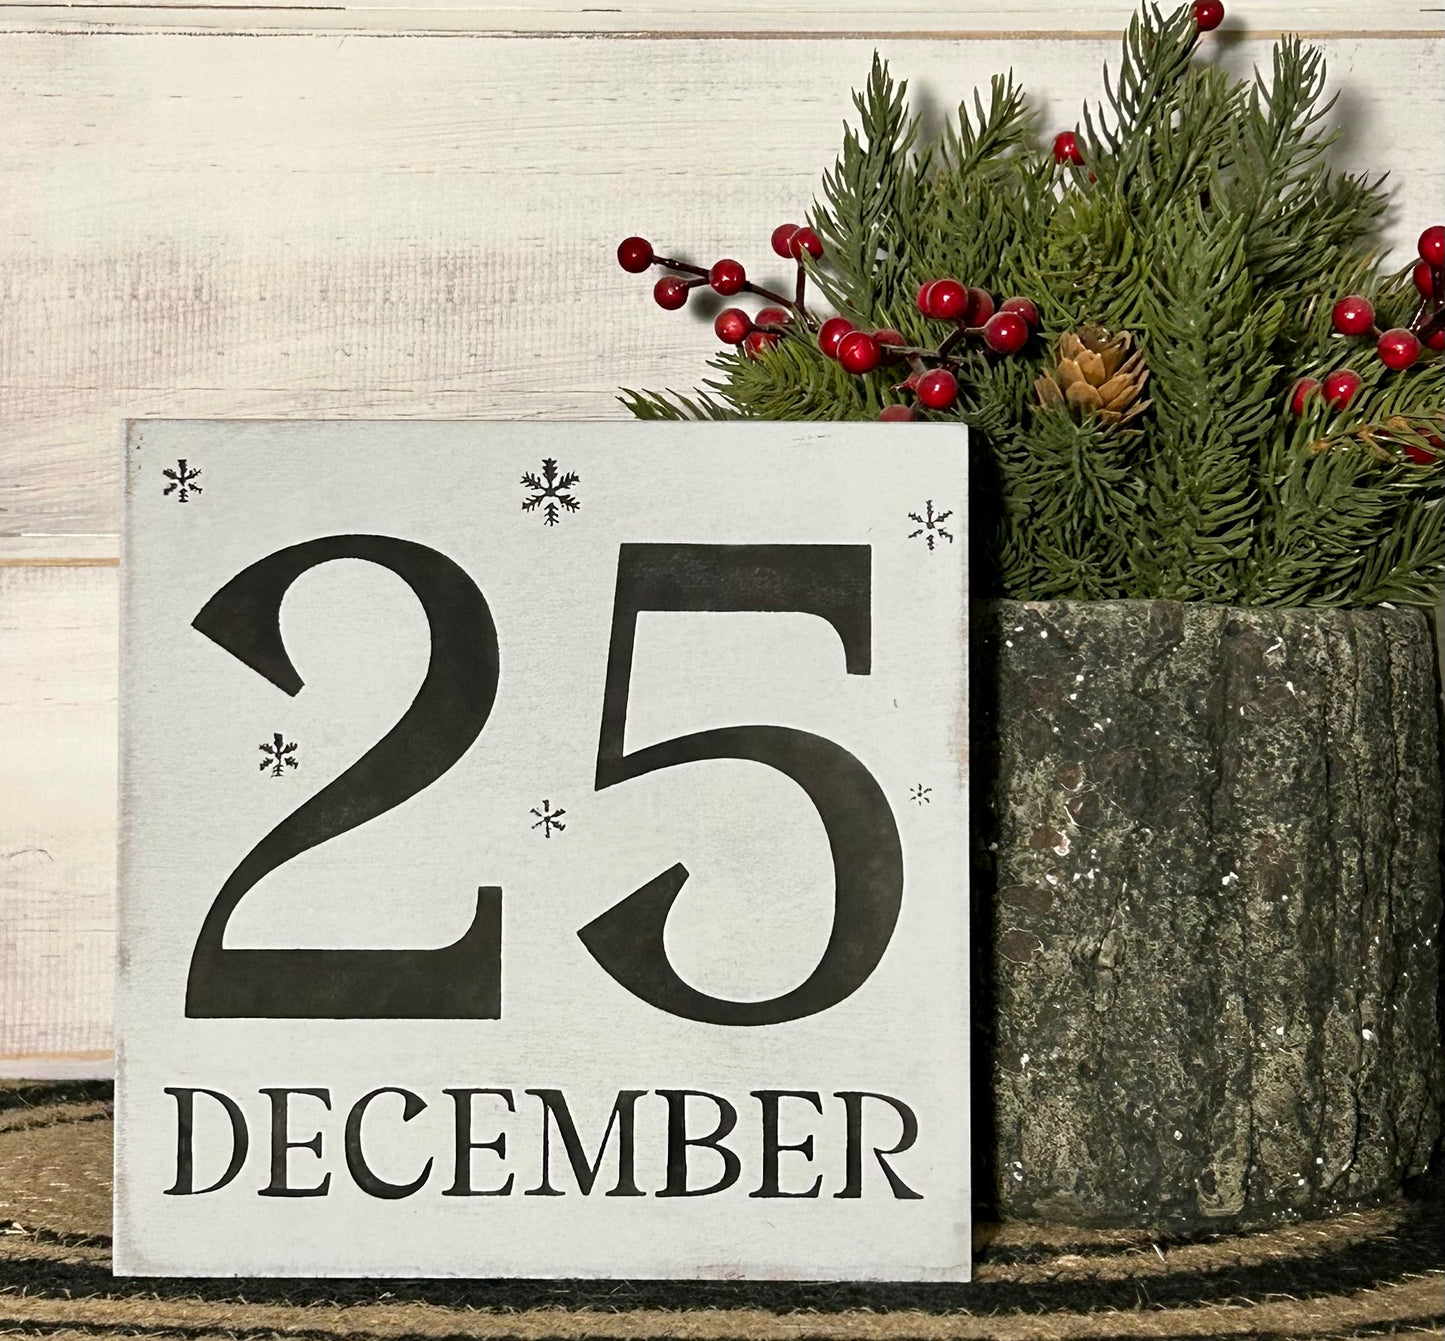 December 25 - Rustic Wood Holiday Shelf Sitter